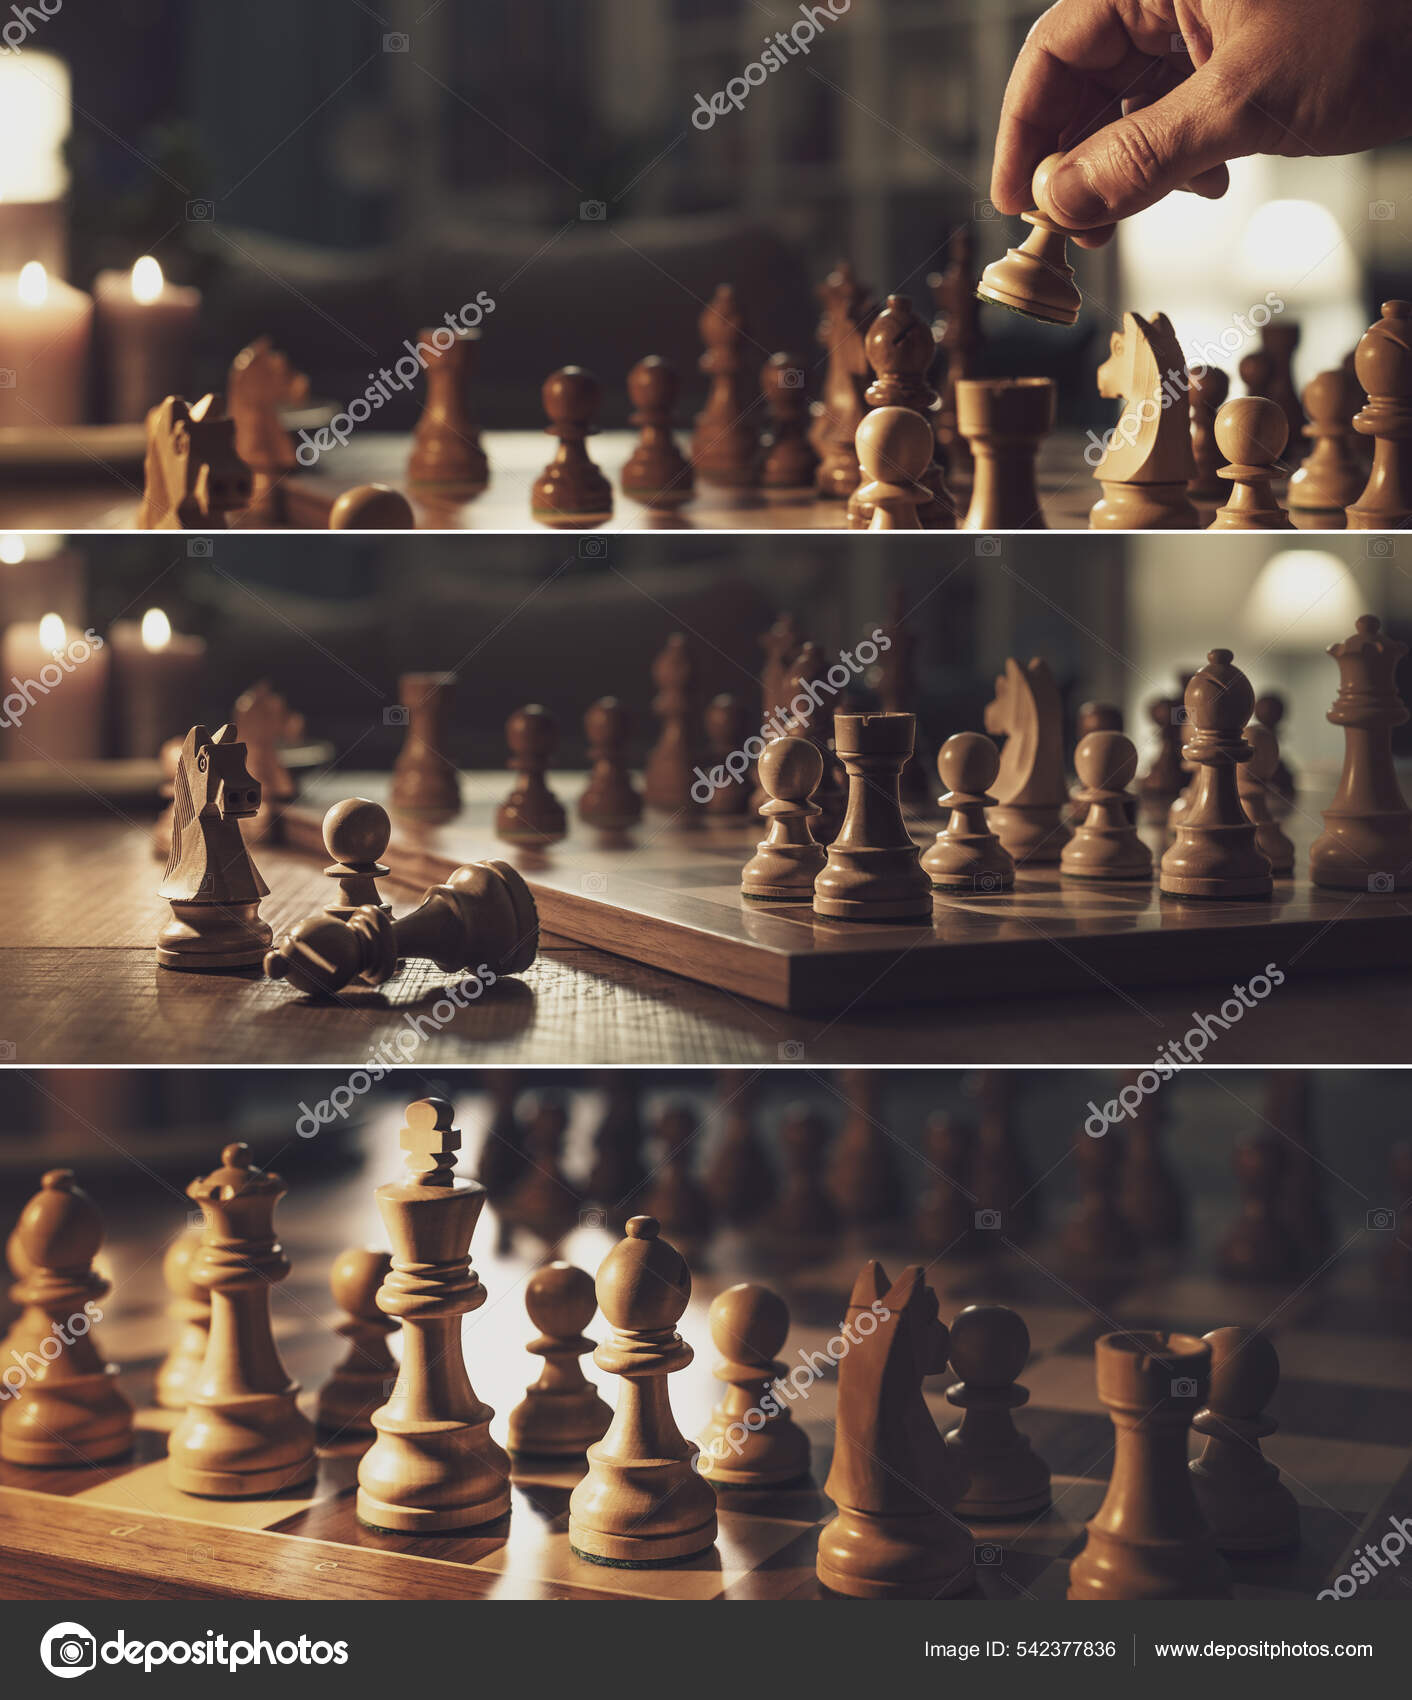 Jogando xadrez sozinho